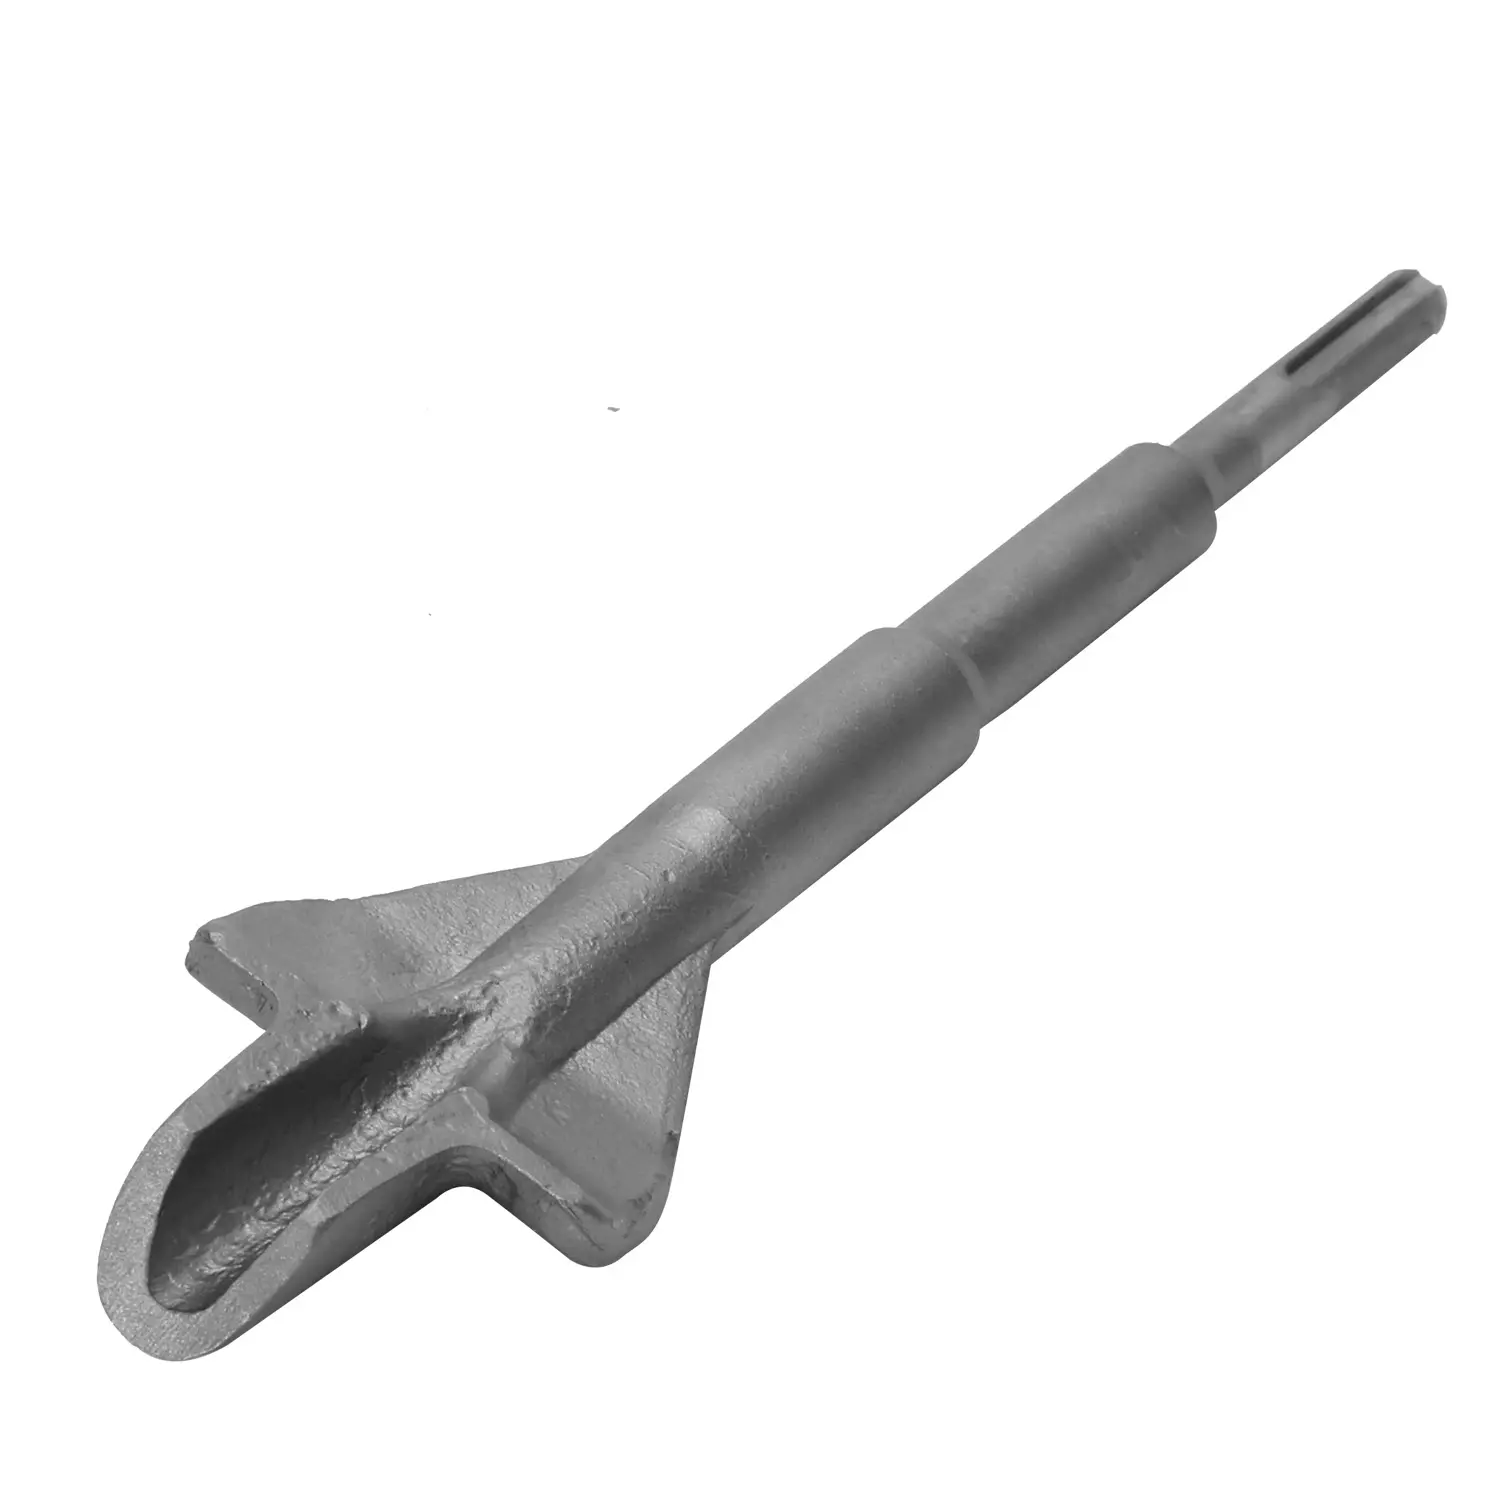 KSEIBI SDS-PLUS Chasing Chisel Bit Hammer Chisel for Concrete Masonry Chisel